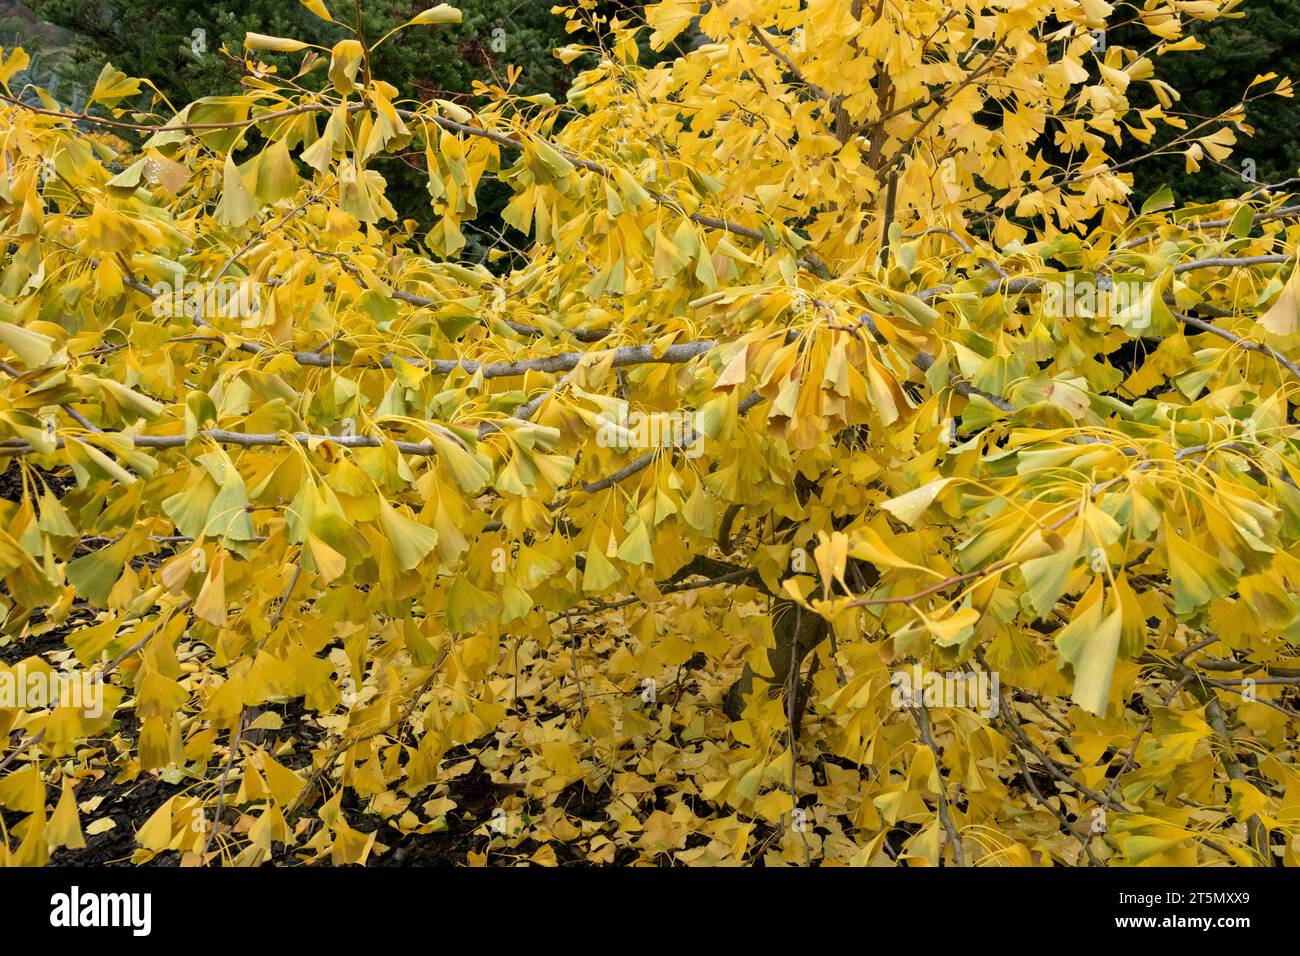 Autumn Auflösung Alamy gold autumn ginkgo hoher – in -Bildmaterial biloba und -Fotos